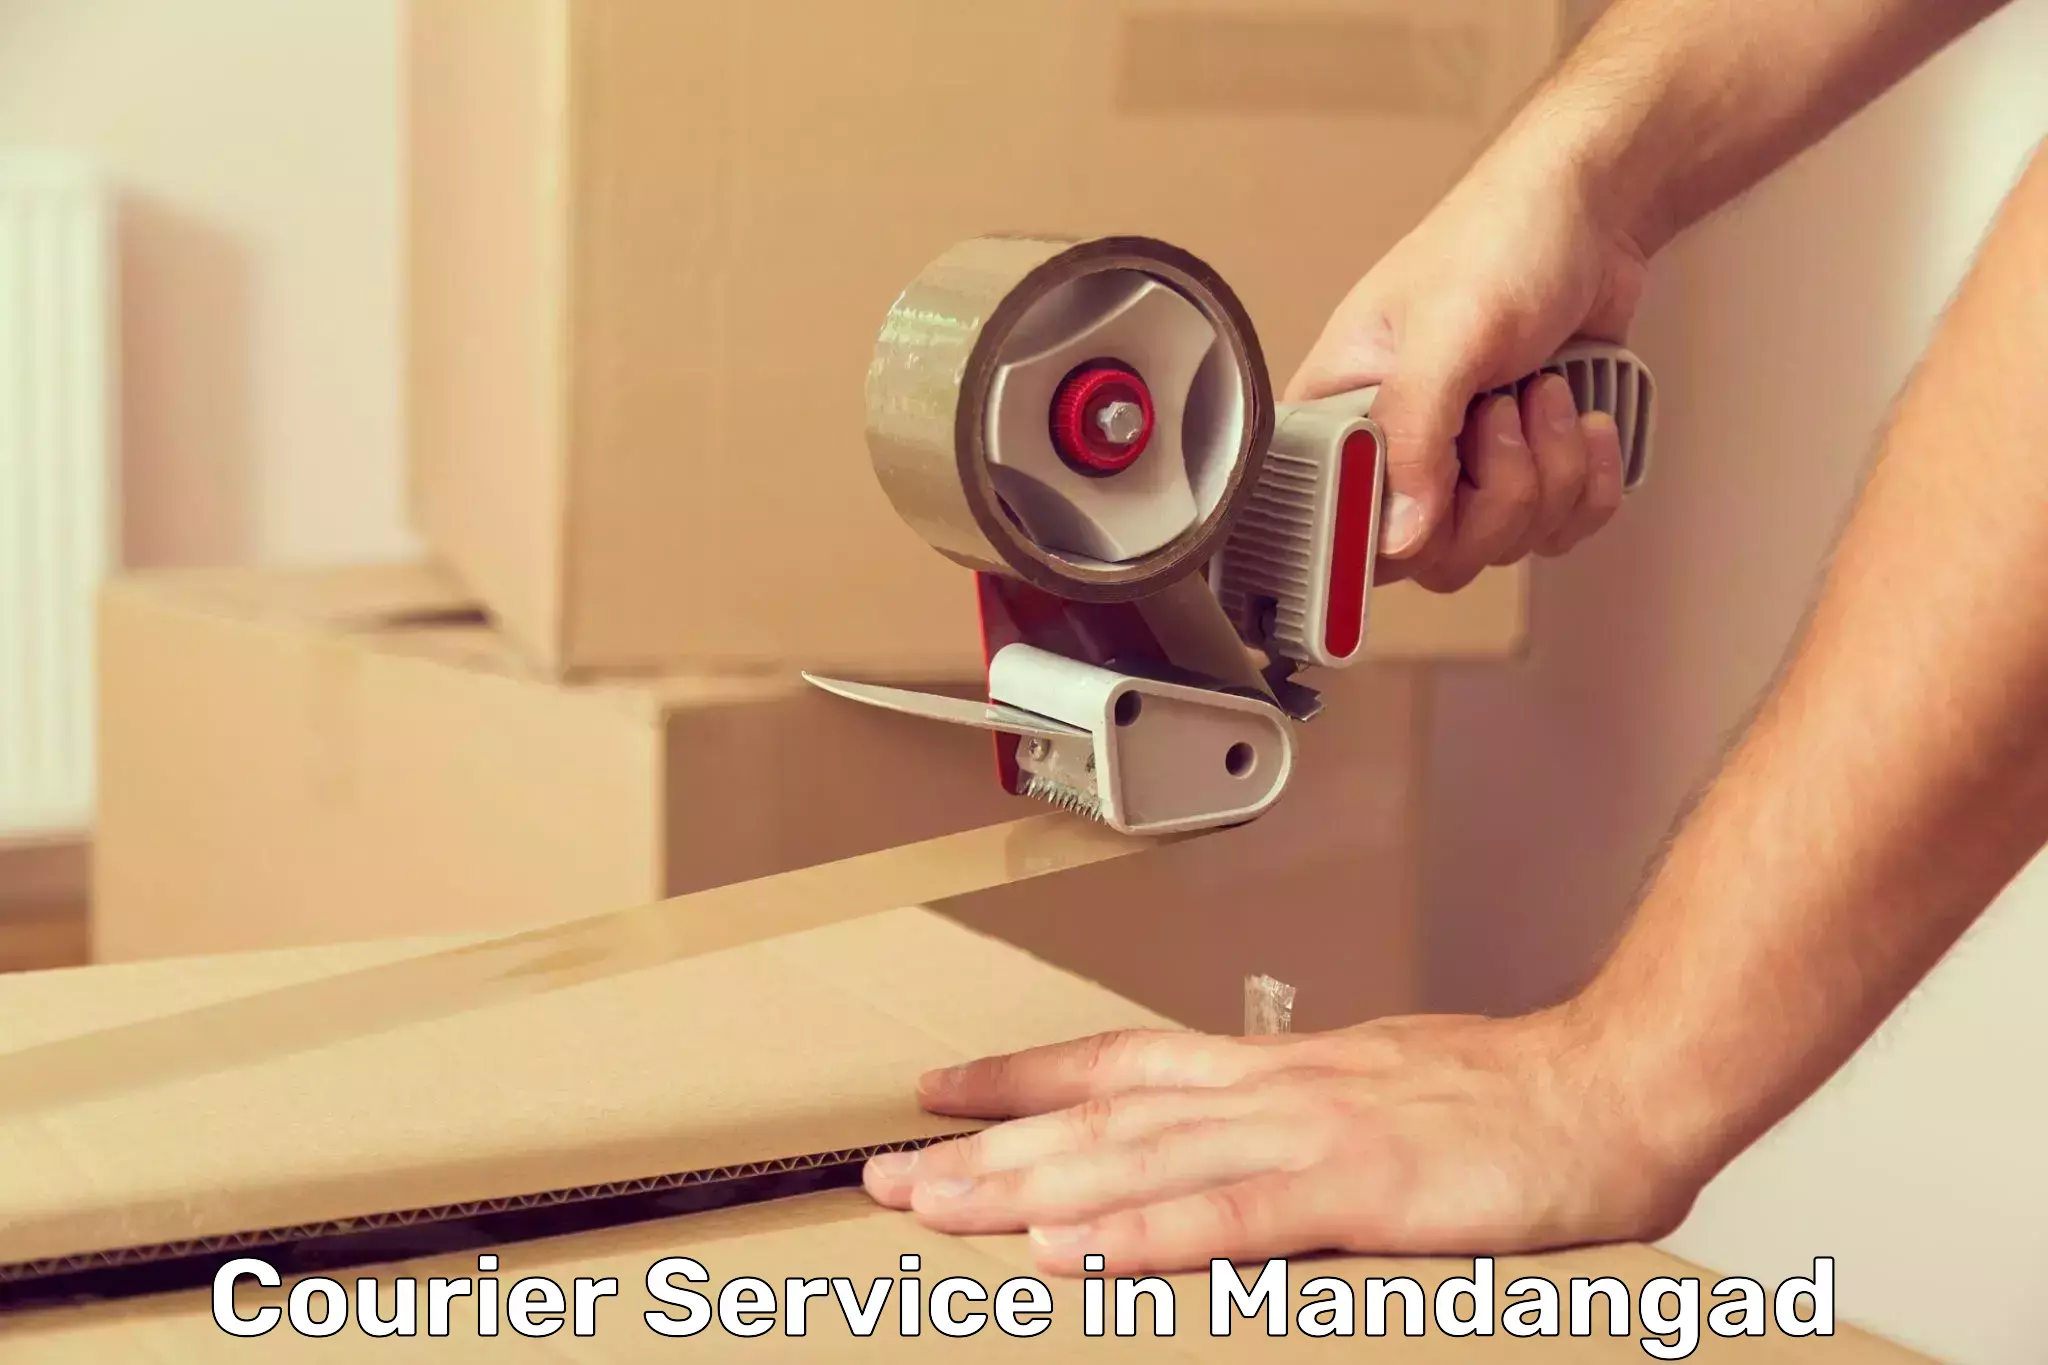 Express mail service in Mandangad